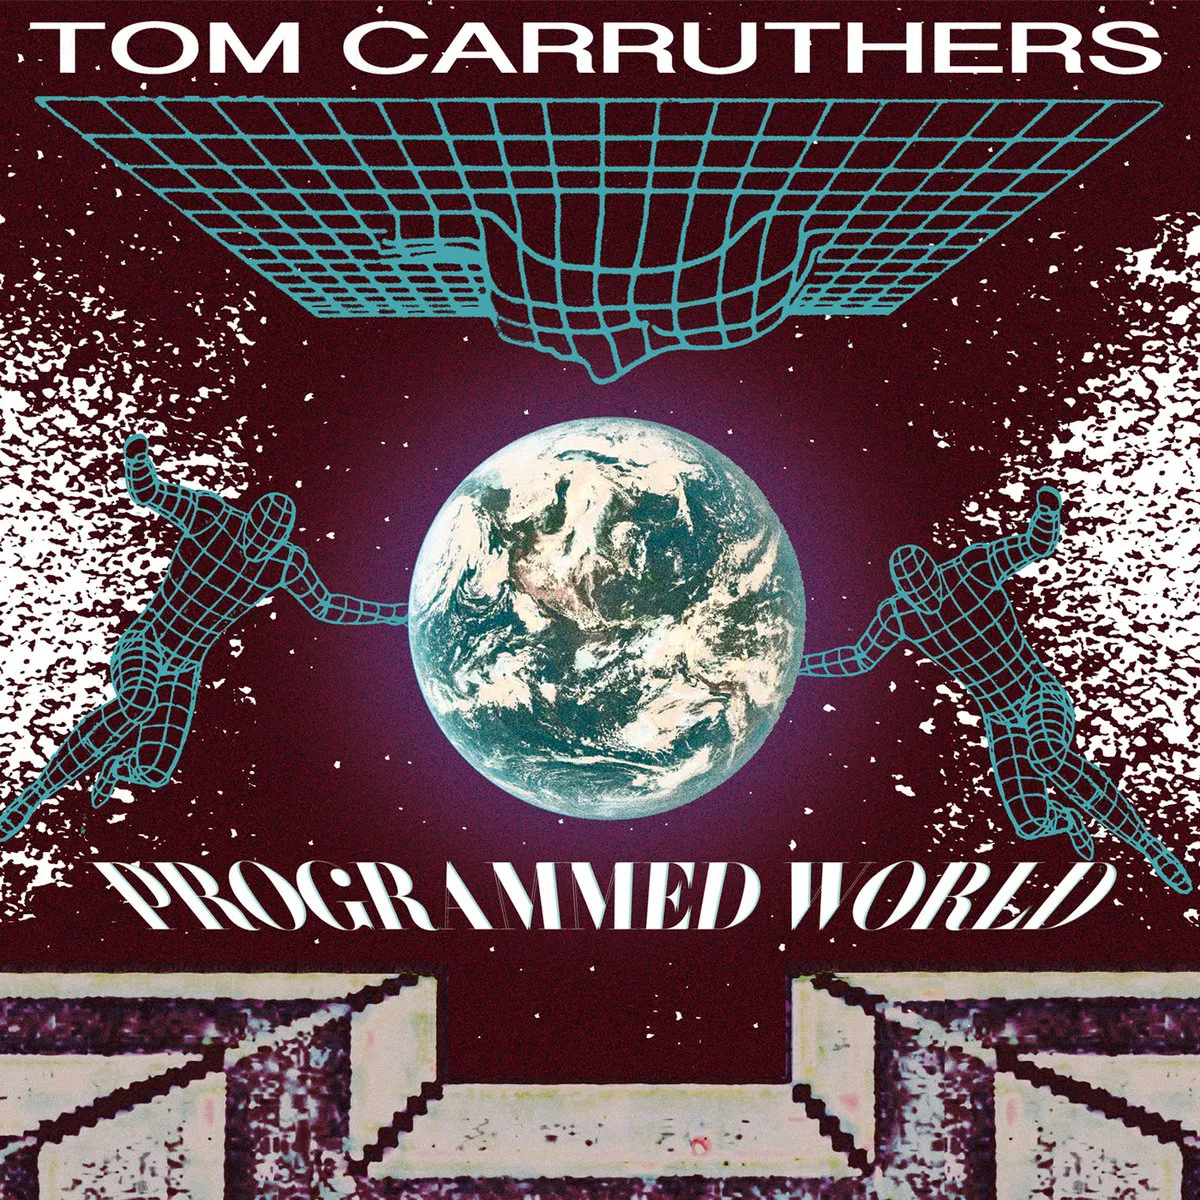 Tom Carruthers - Programmed World : LP